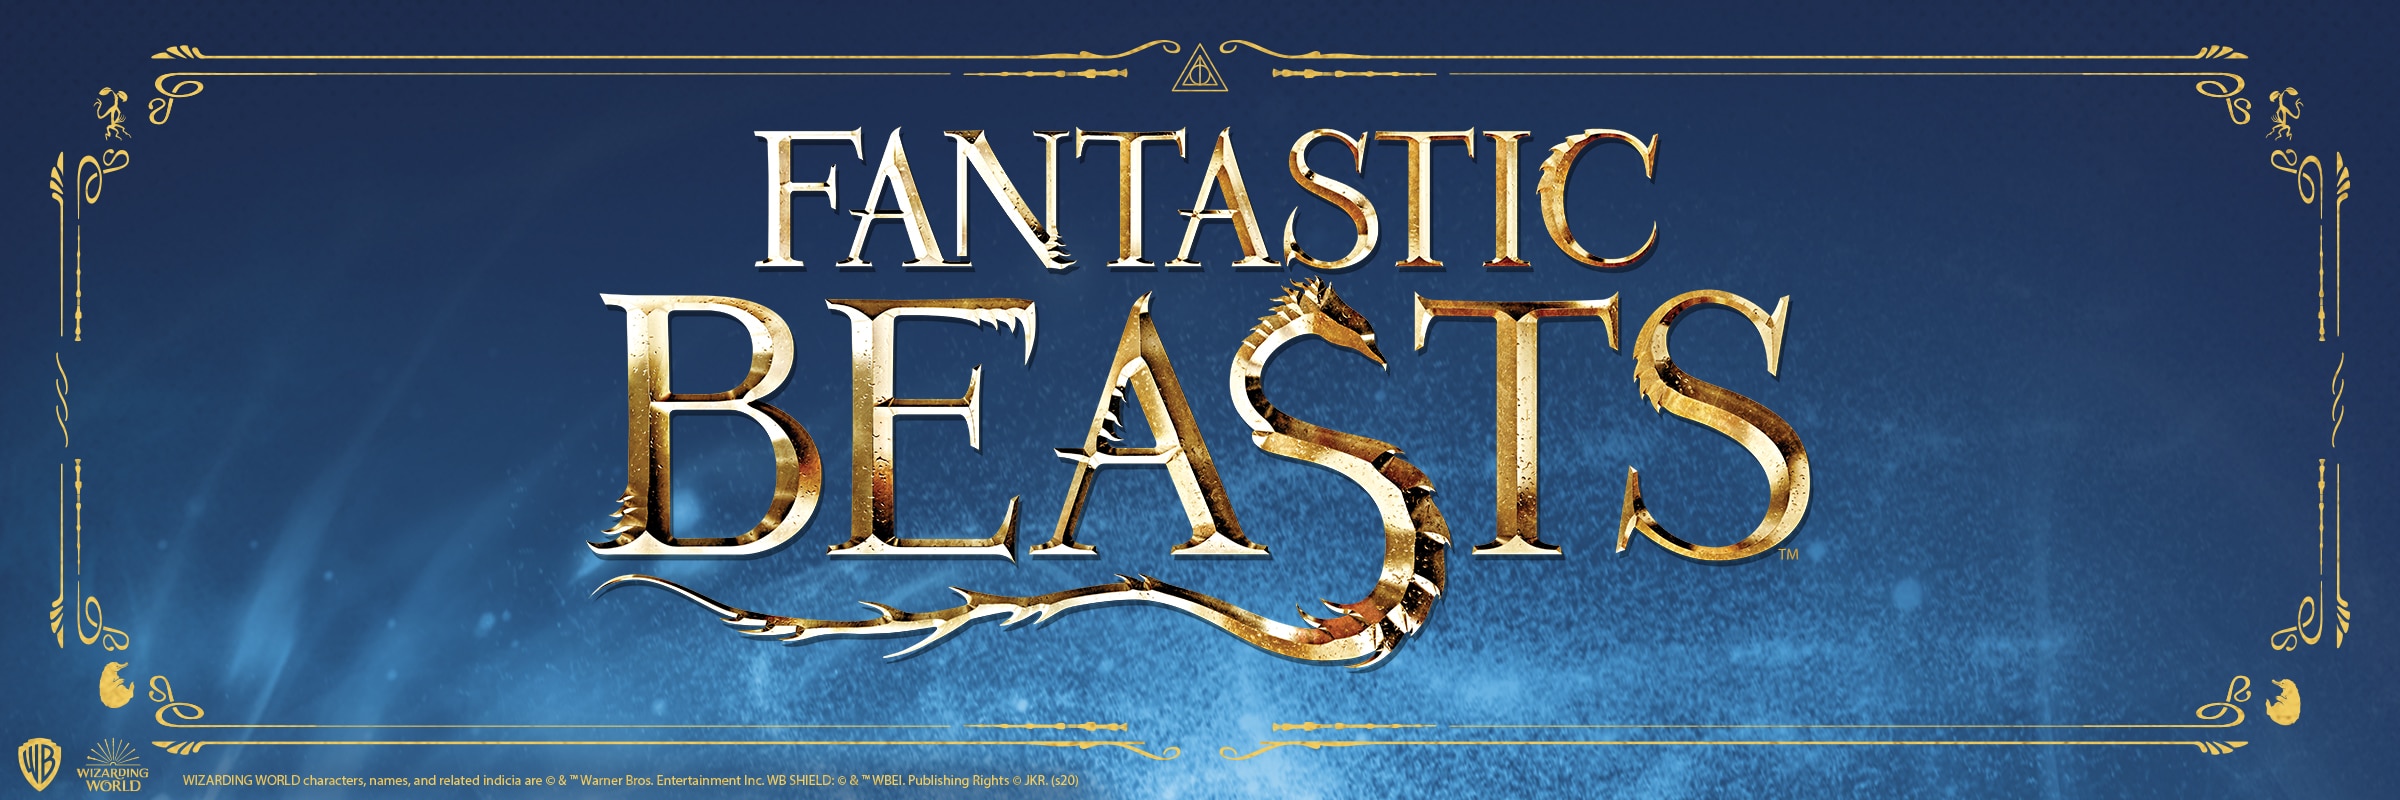 Fantastic Beasts™ Merchandise